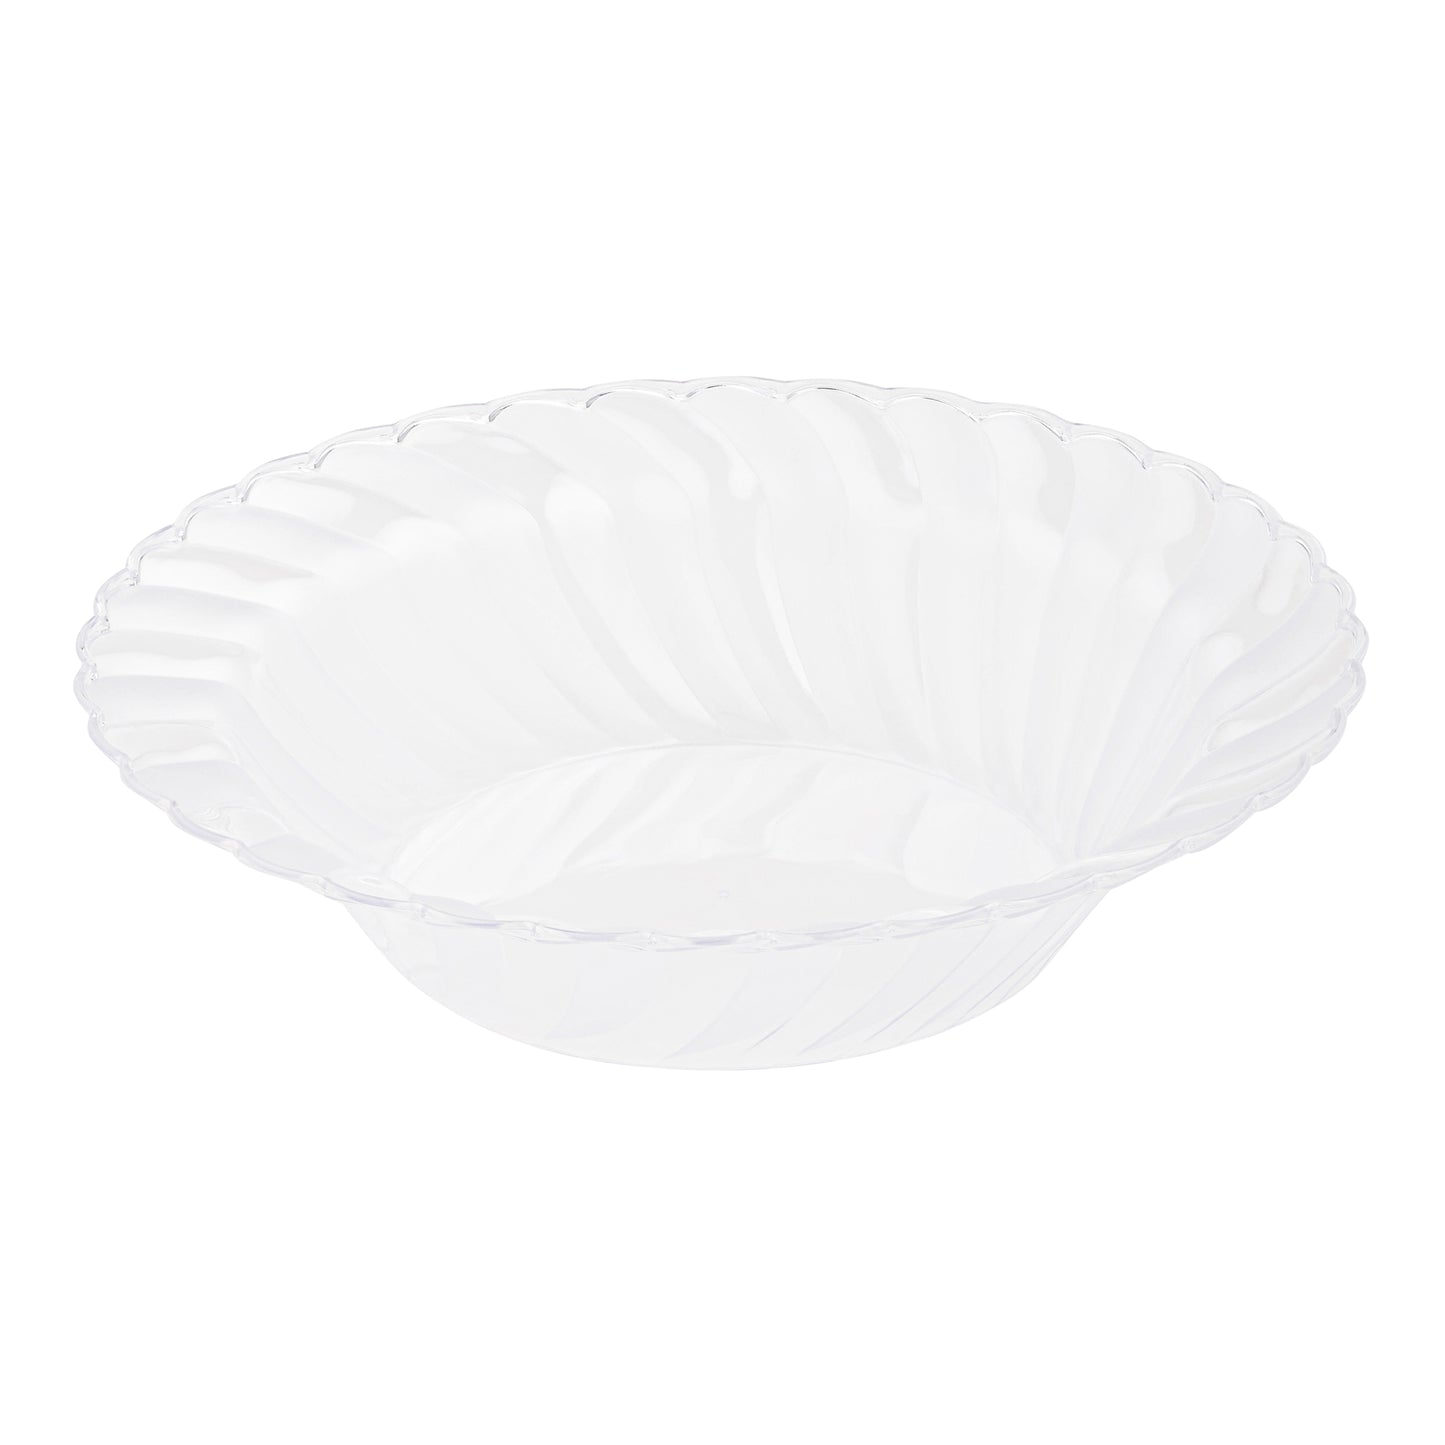 Clear Flair Disposable Plastic Dessert Bowls (5 oz.)